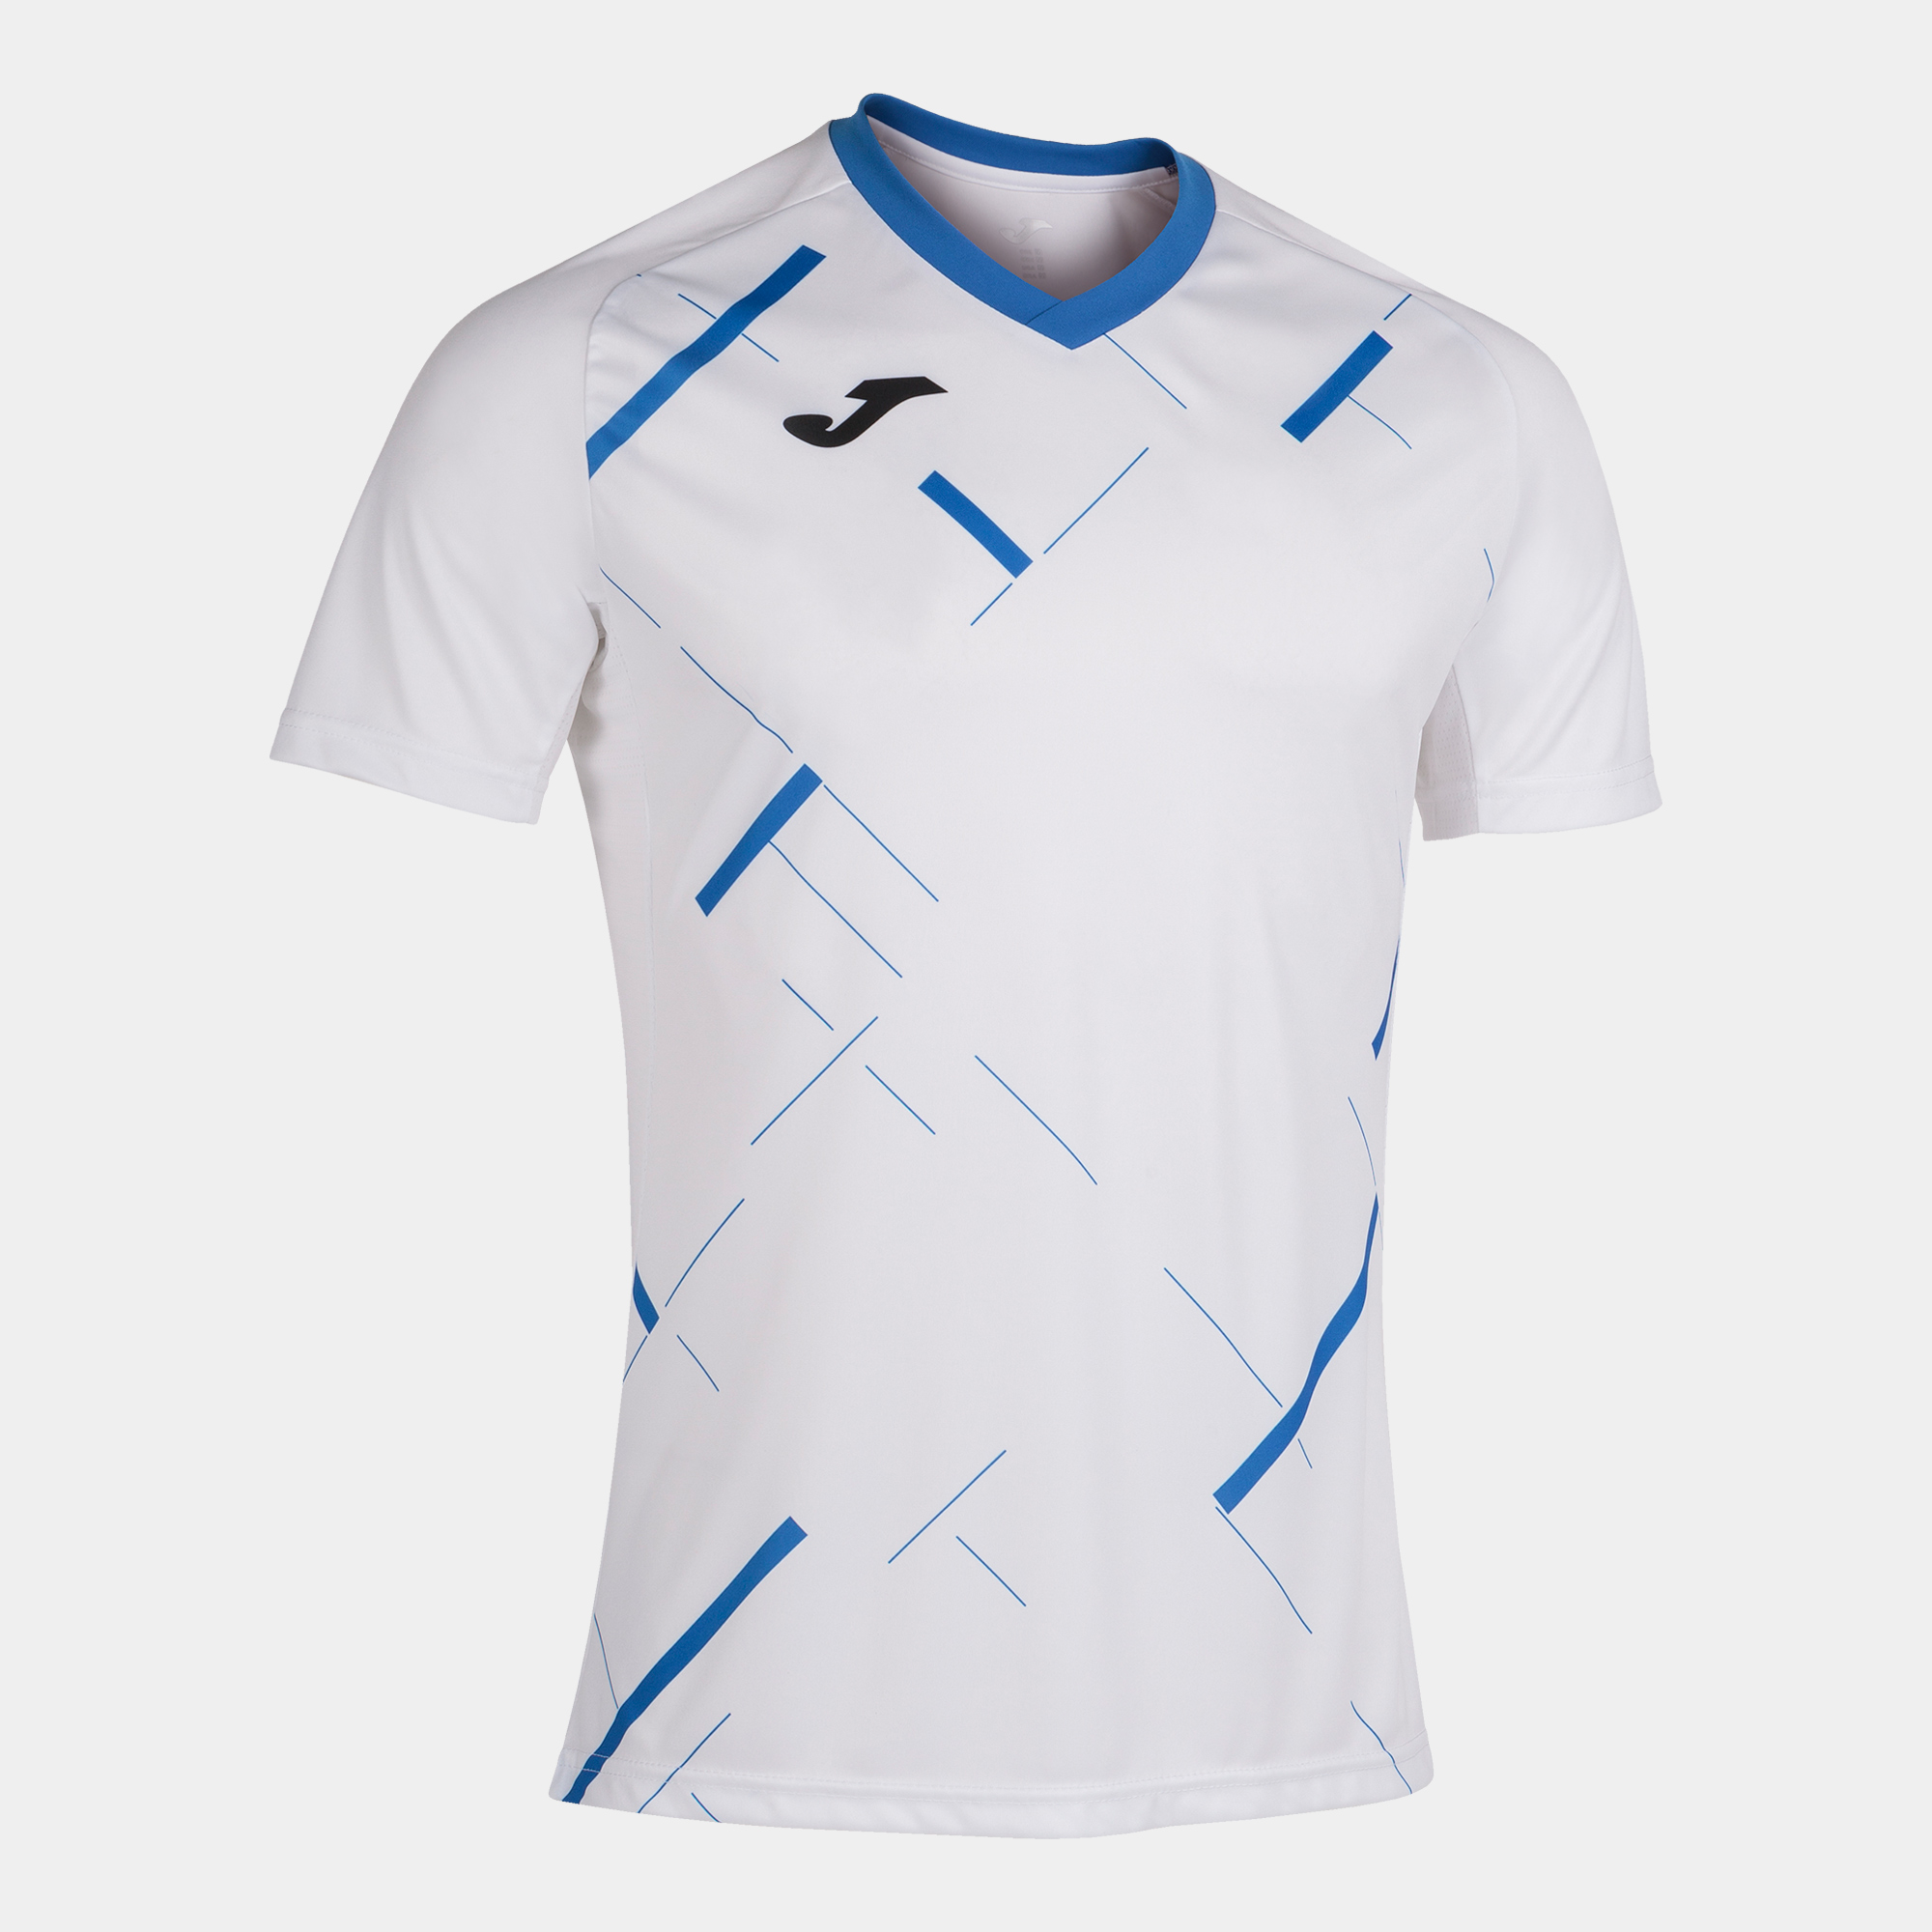 Fútbol, Camiseta Manga Corta Hombre Tiger Iv Blanco Royal